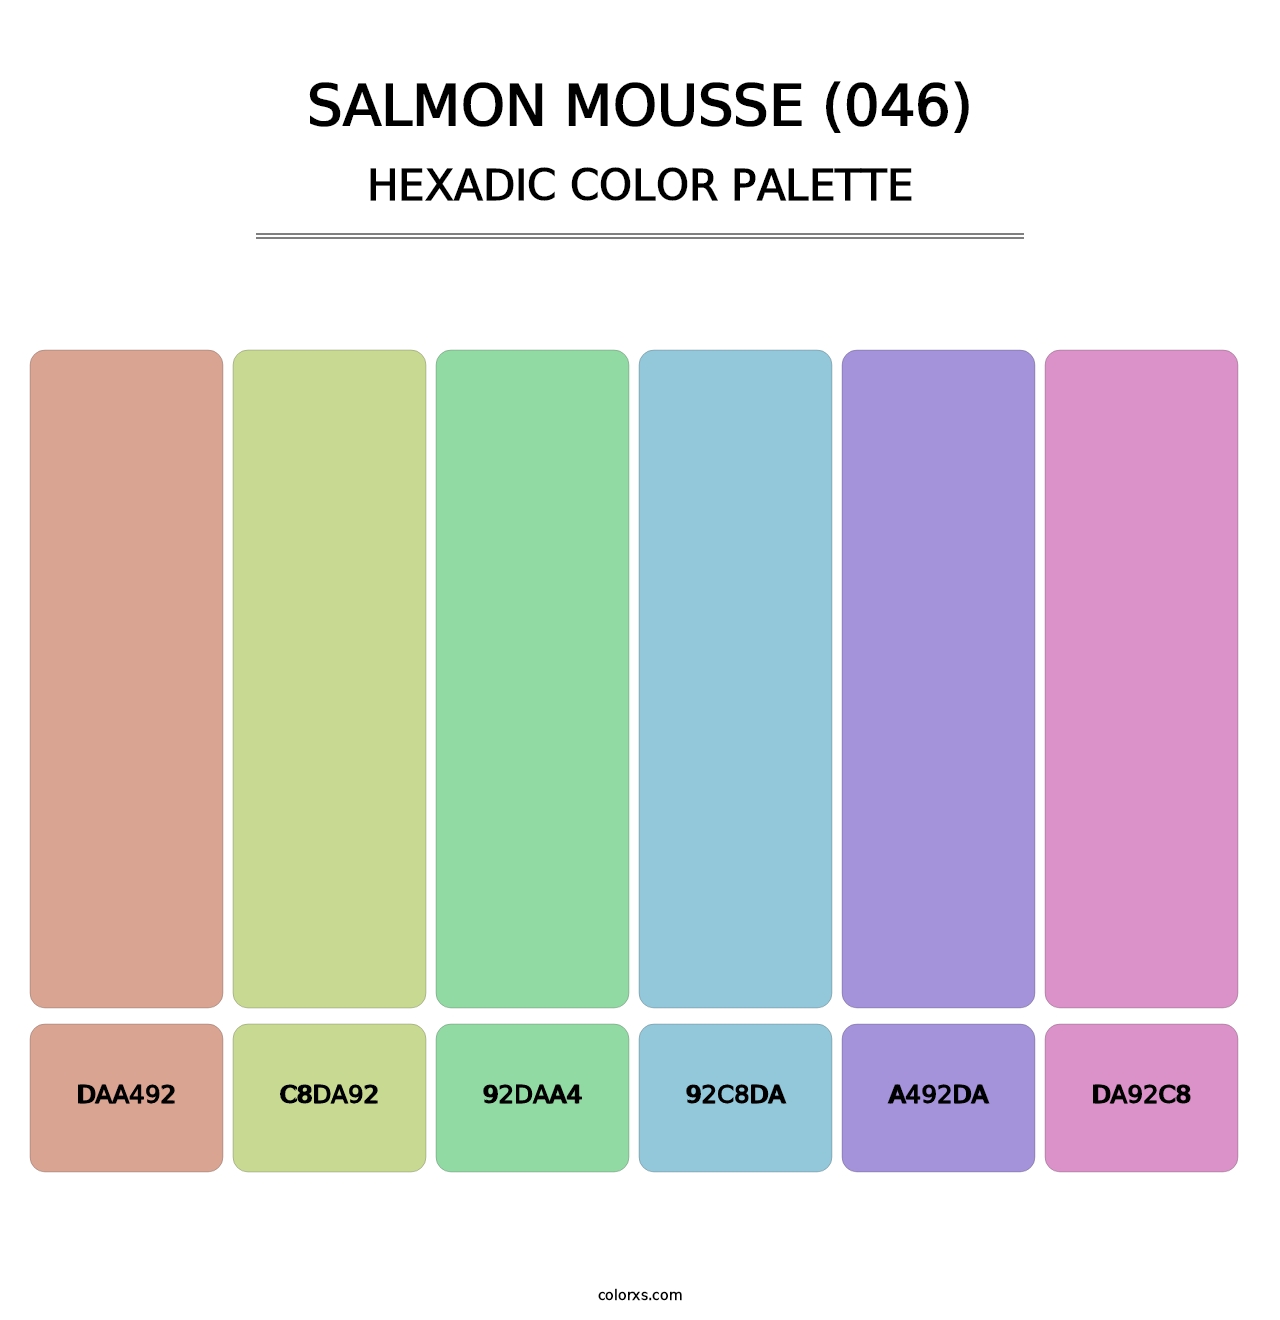 Salmon Mousse (046) - Hexadic Color Palette